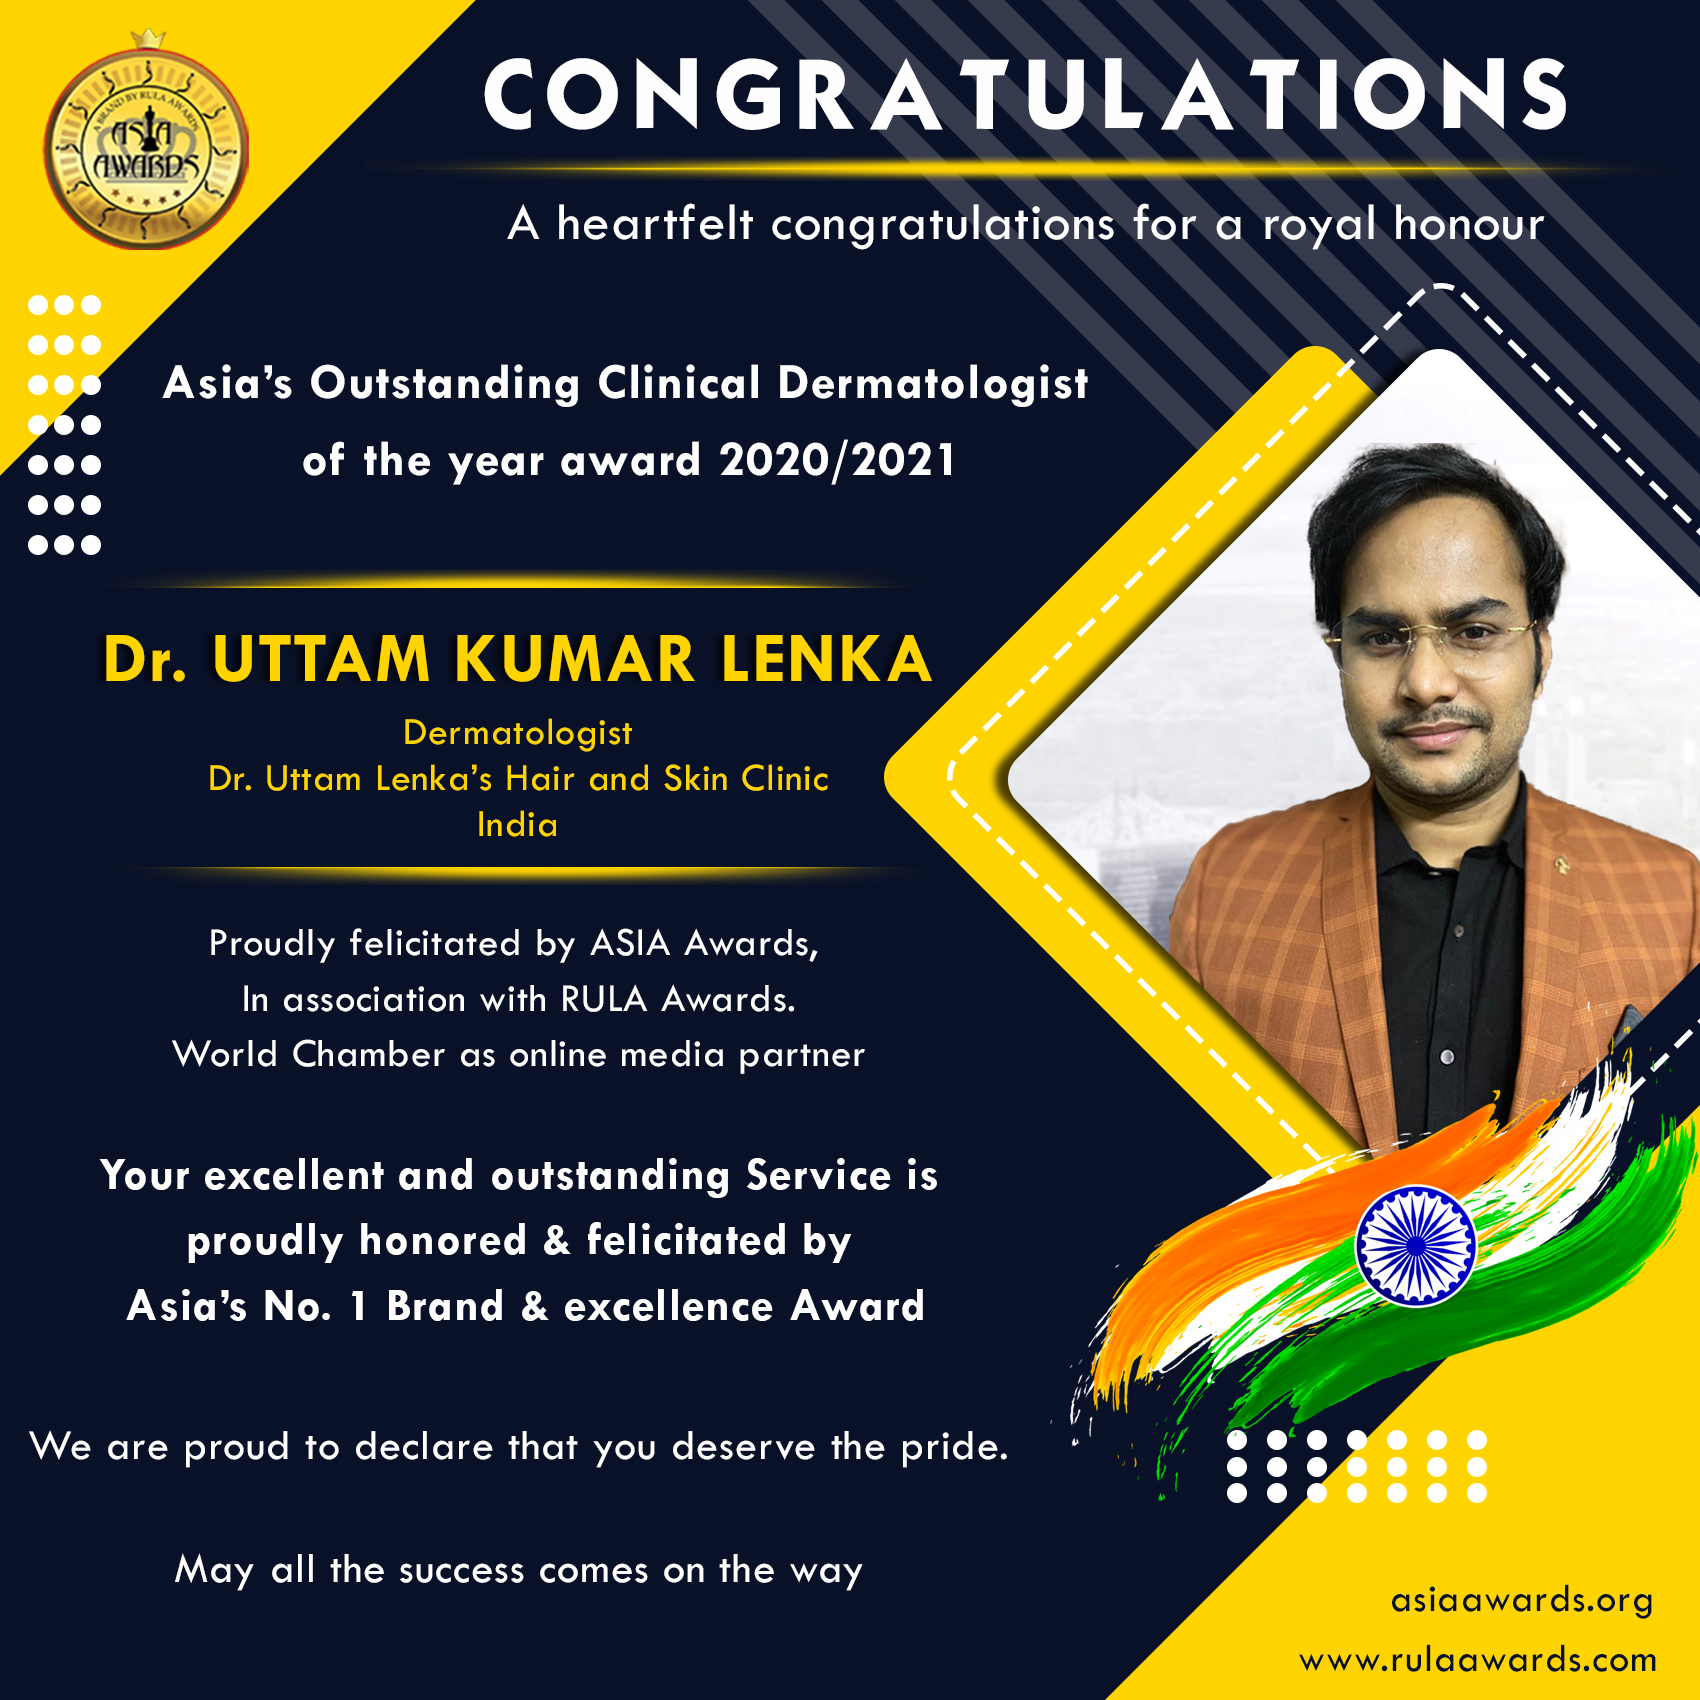 Dr Uttam Kumar Lenka has bagged Asia's Outstanding Clinical Dermatologist Award